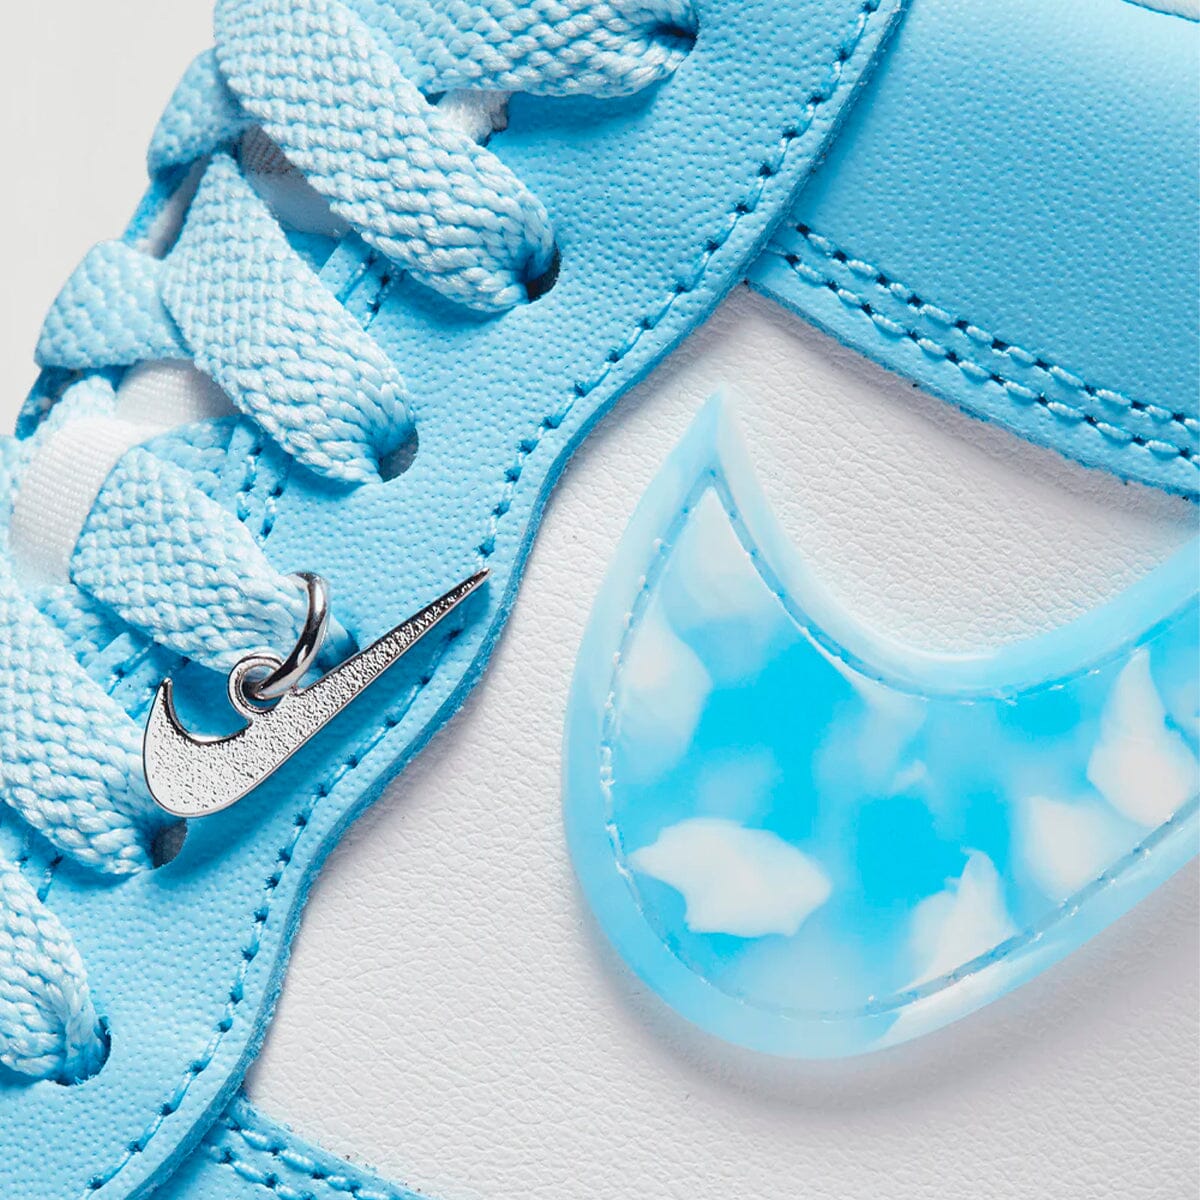 Nike Air Force 1 Low Nail Art White Blue Blizz Sneakers 